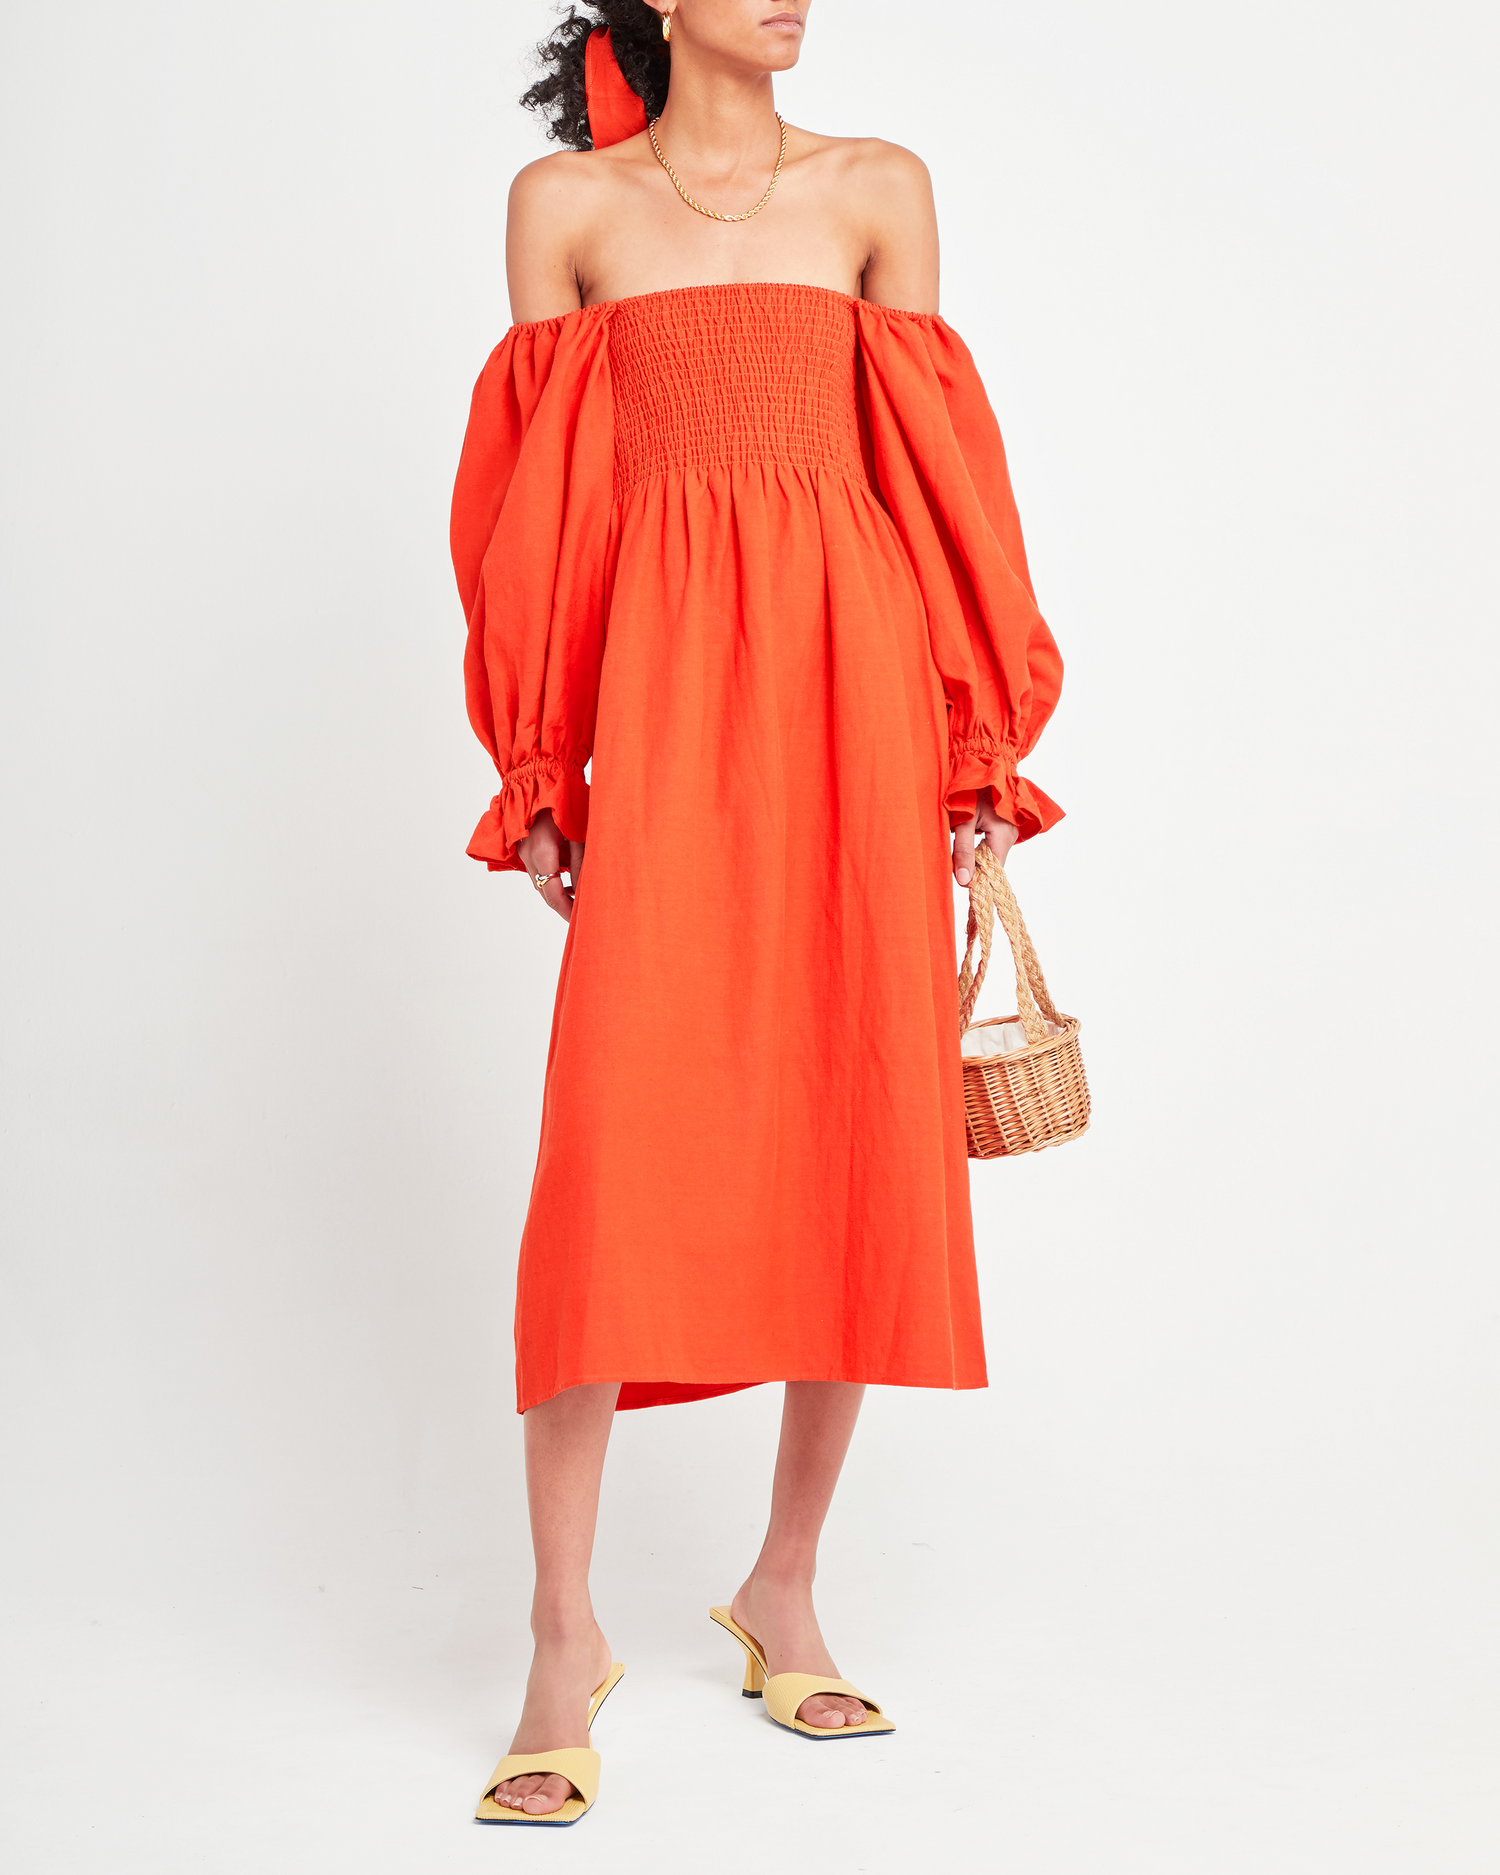 Fifth image of Athena Dress, a orange midi dress, long puff sleeves, smocked, square neckline